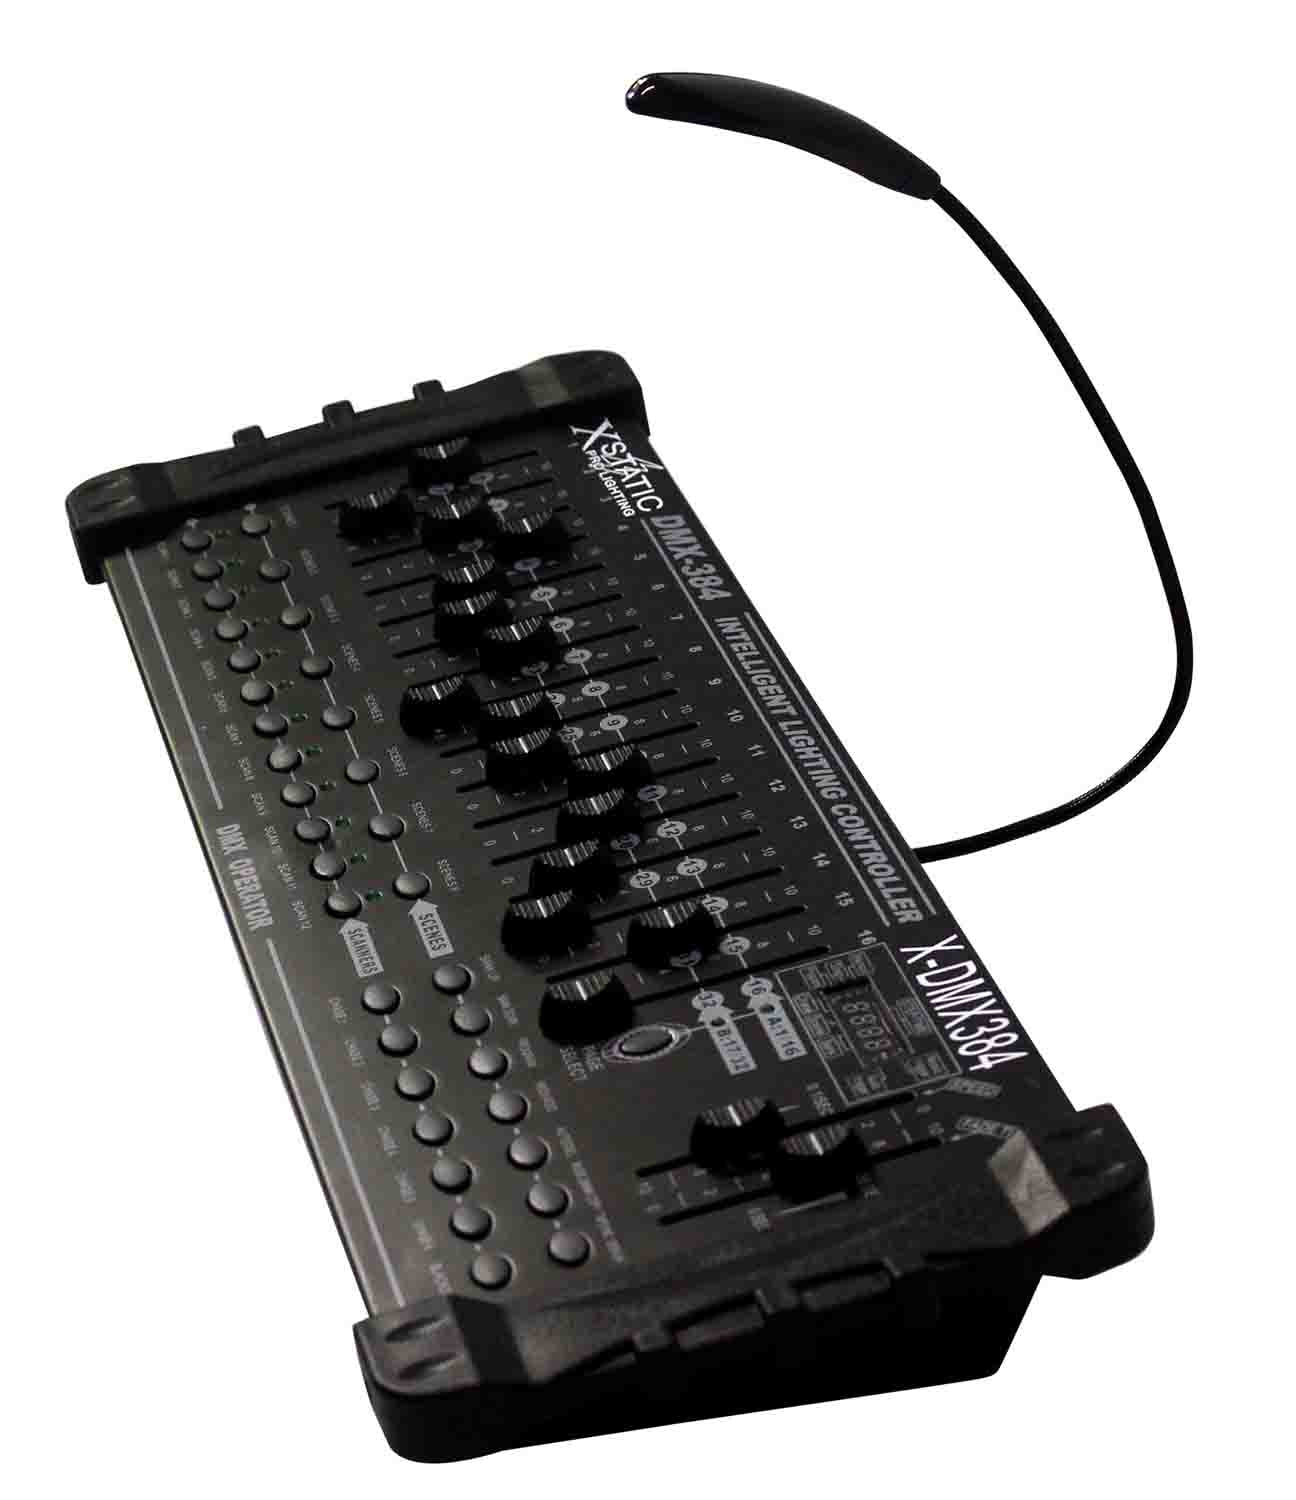 ProX X-DMX384 DMX 384 Intelligent Lighting Controller - Hollywood DJ